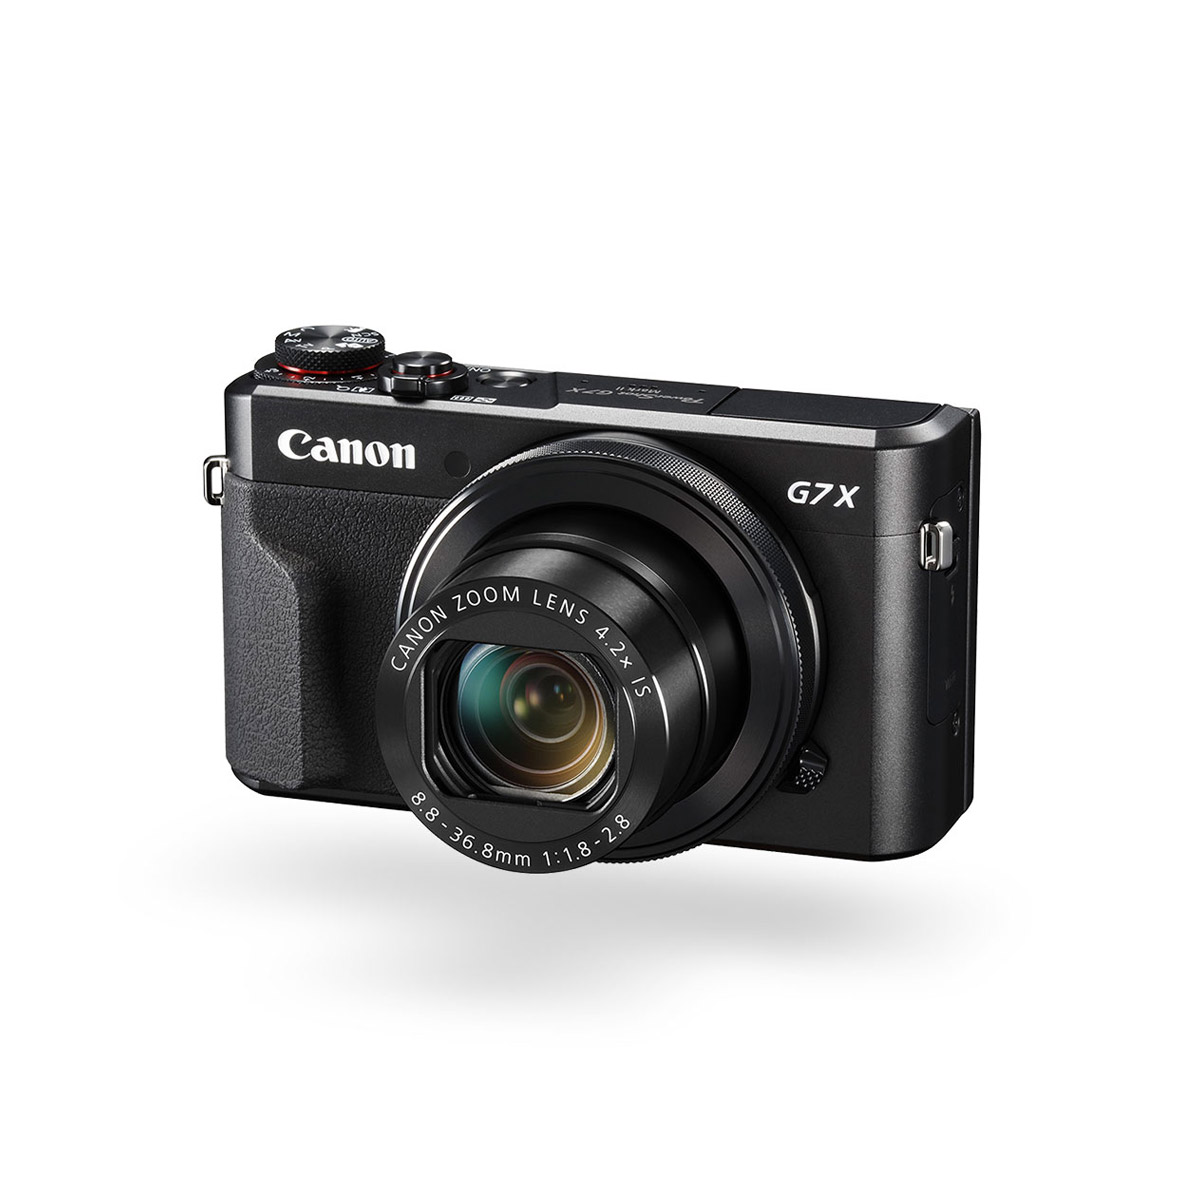 PDXD-share Compact Camera Case PU Housse en Cuir Sac pour Canon PowerShot SX520 SX530 HS Digital Camera 